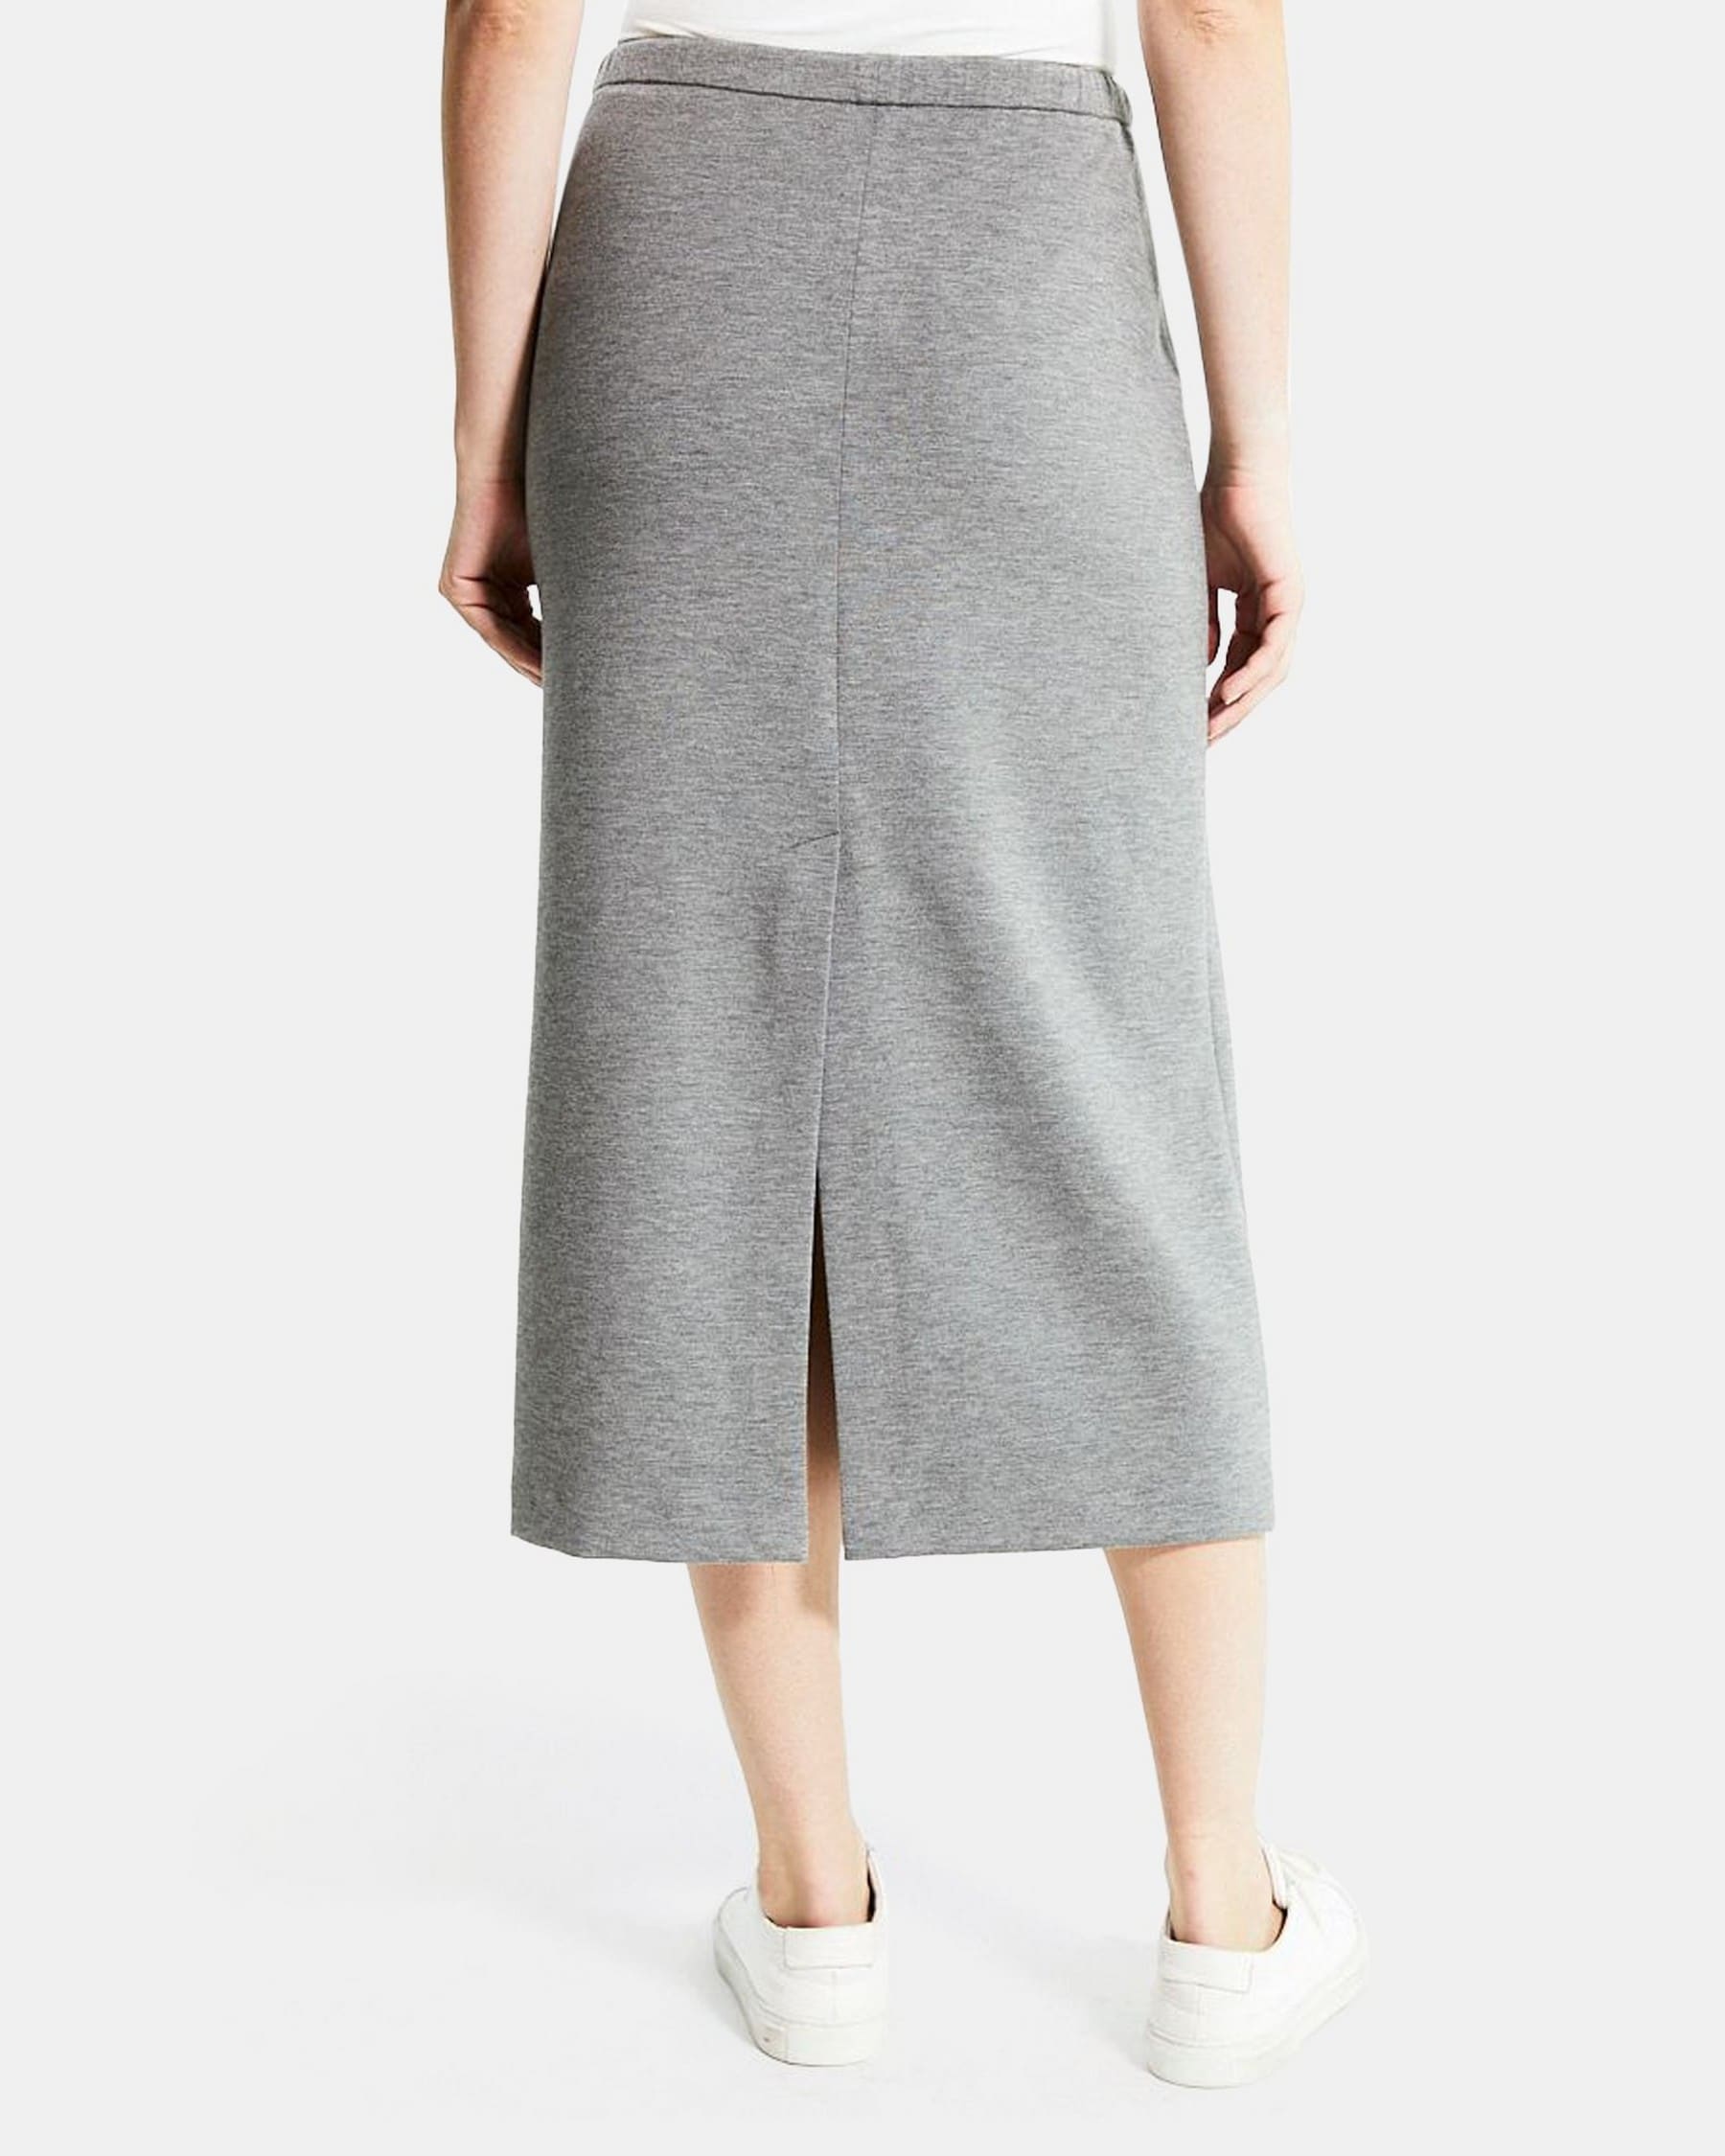 Drawstring Slip Skirt in Double-Knit Jersey